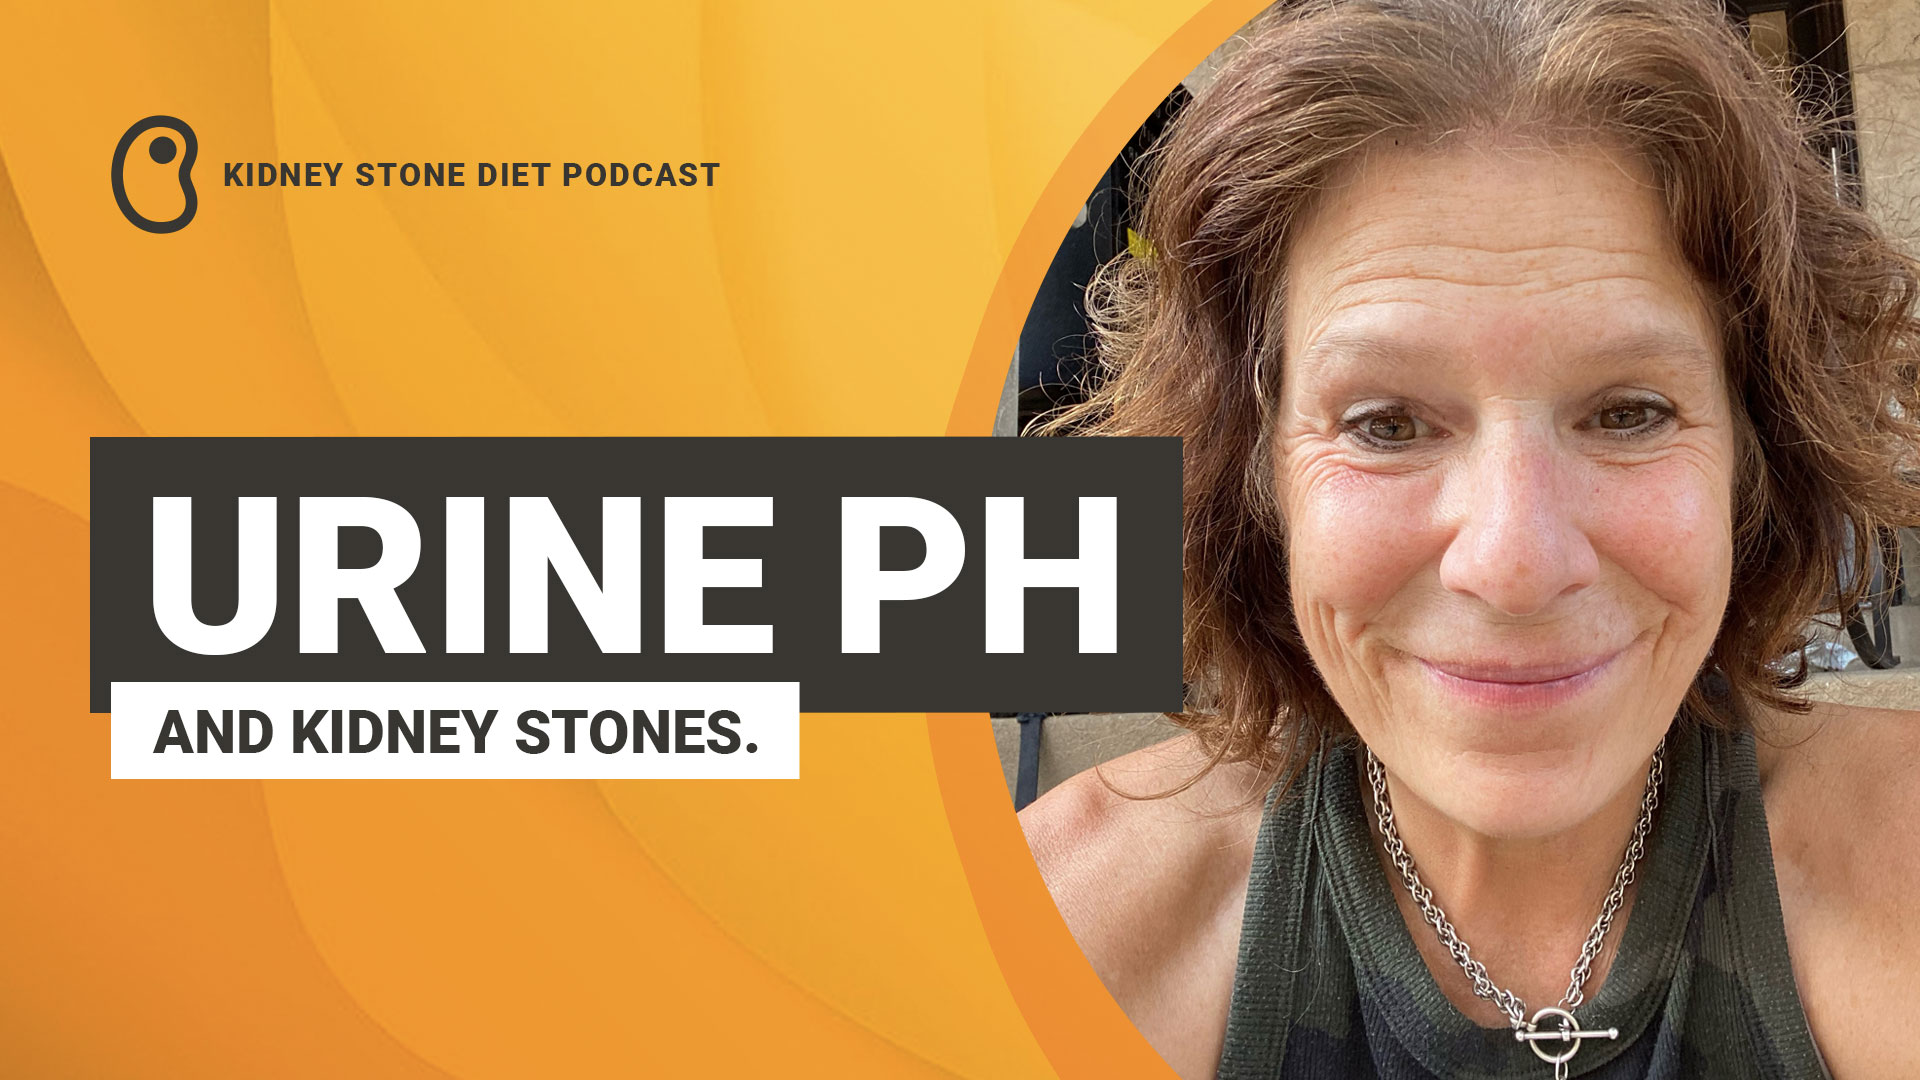 Urine pH and kidney stones